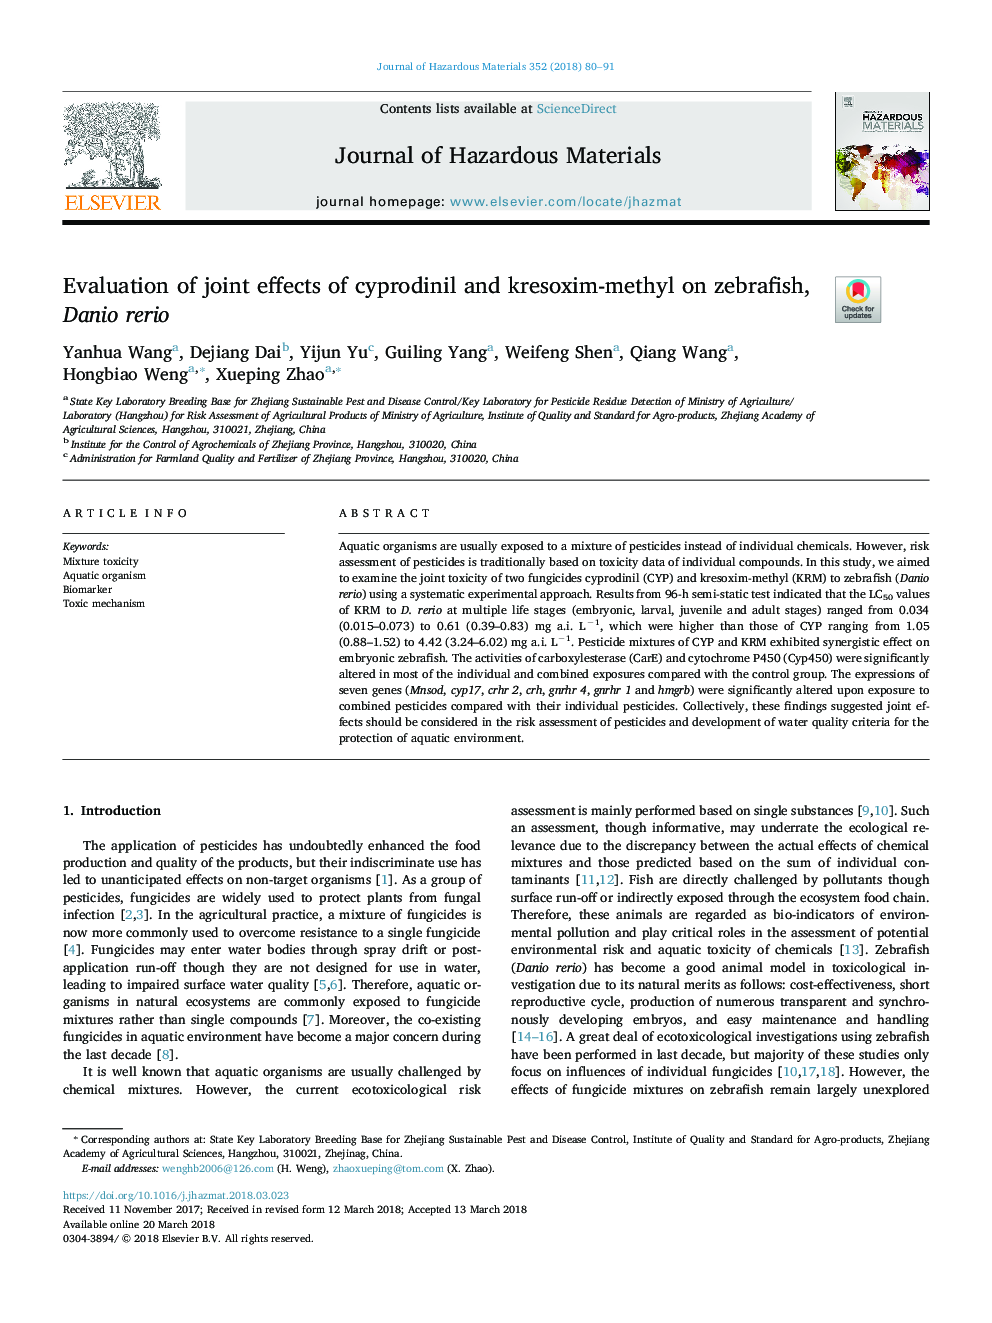 Evaluation of joint effects of cyprodinil and kresoxim-methyl on zebrafish, Danio rerio